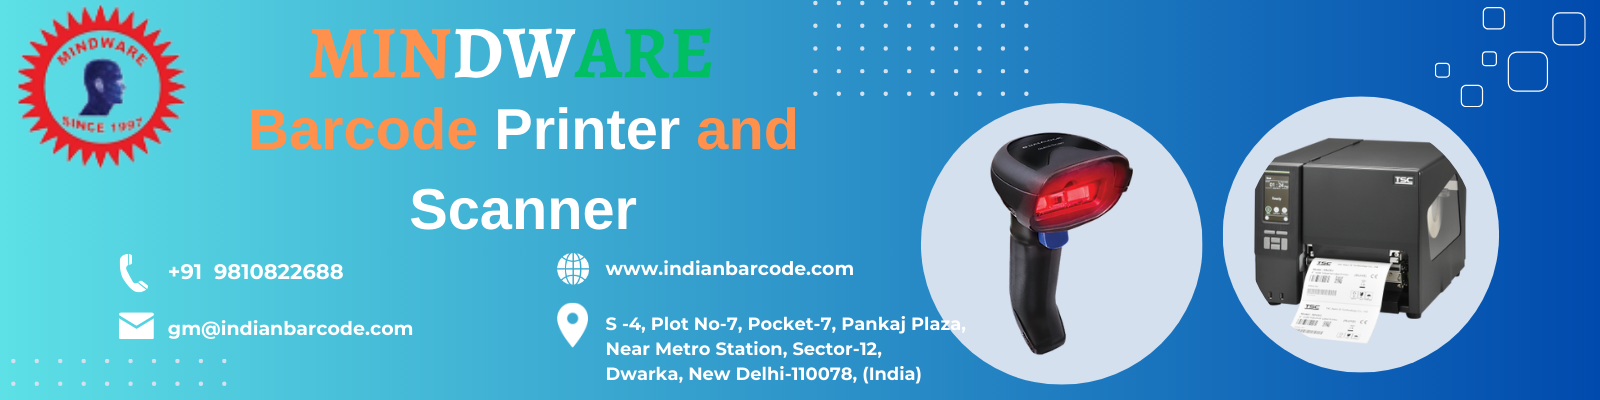 Mindware Barcode Printer & Scanner